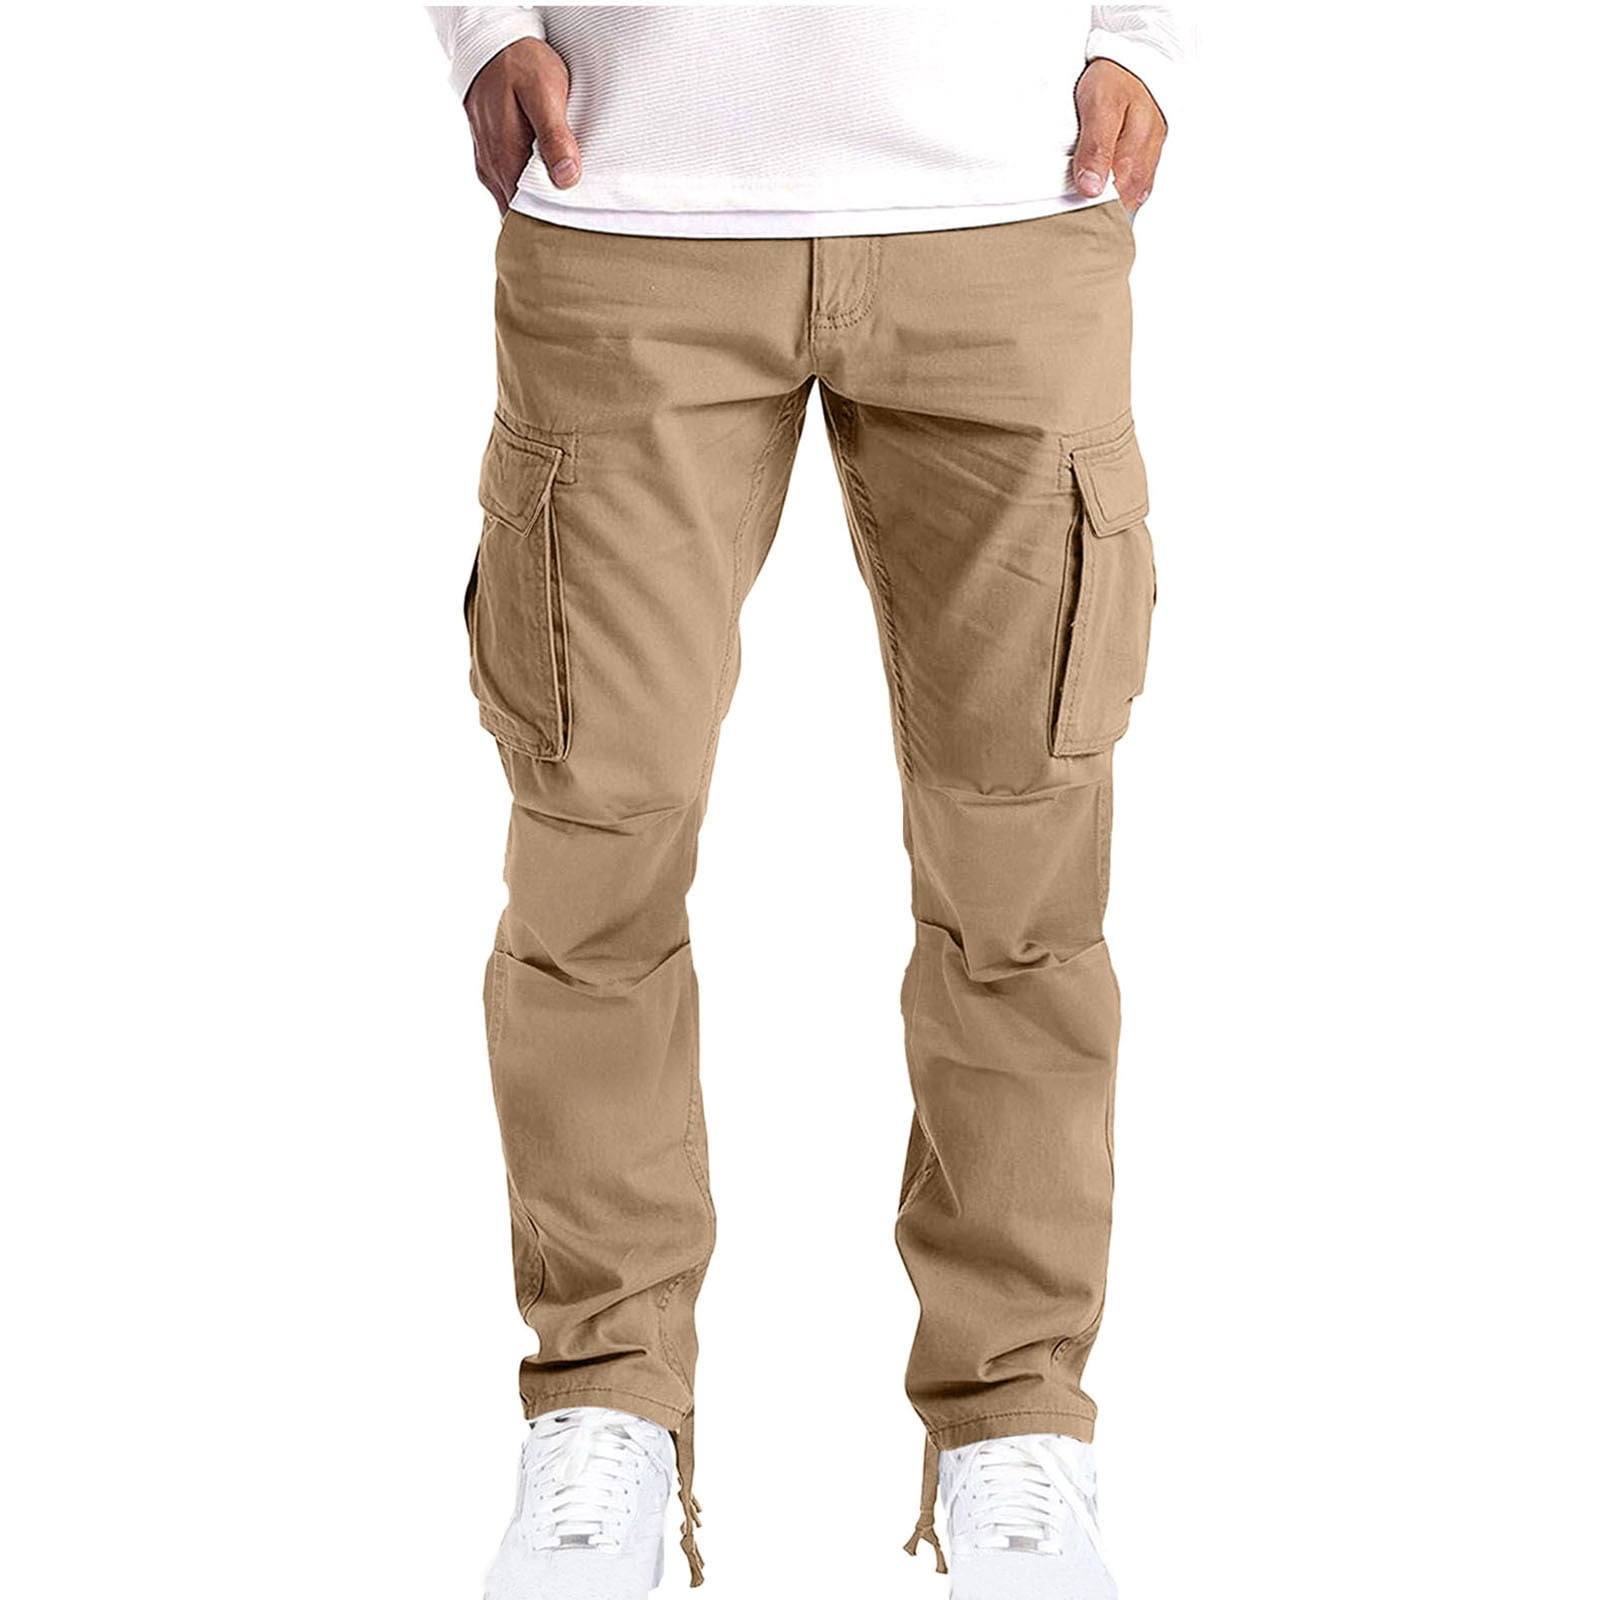 Clearance-sale Khaki Cargo Pants for Men Men Solid Patchwork Casual ...